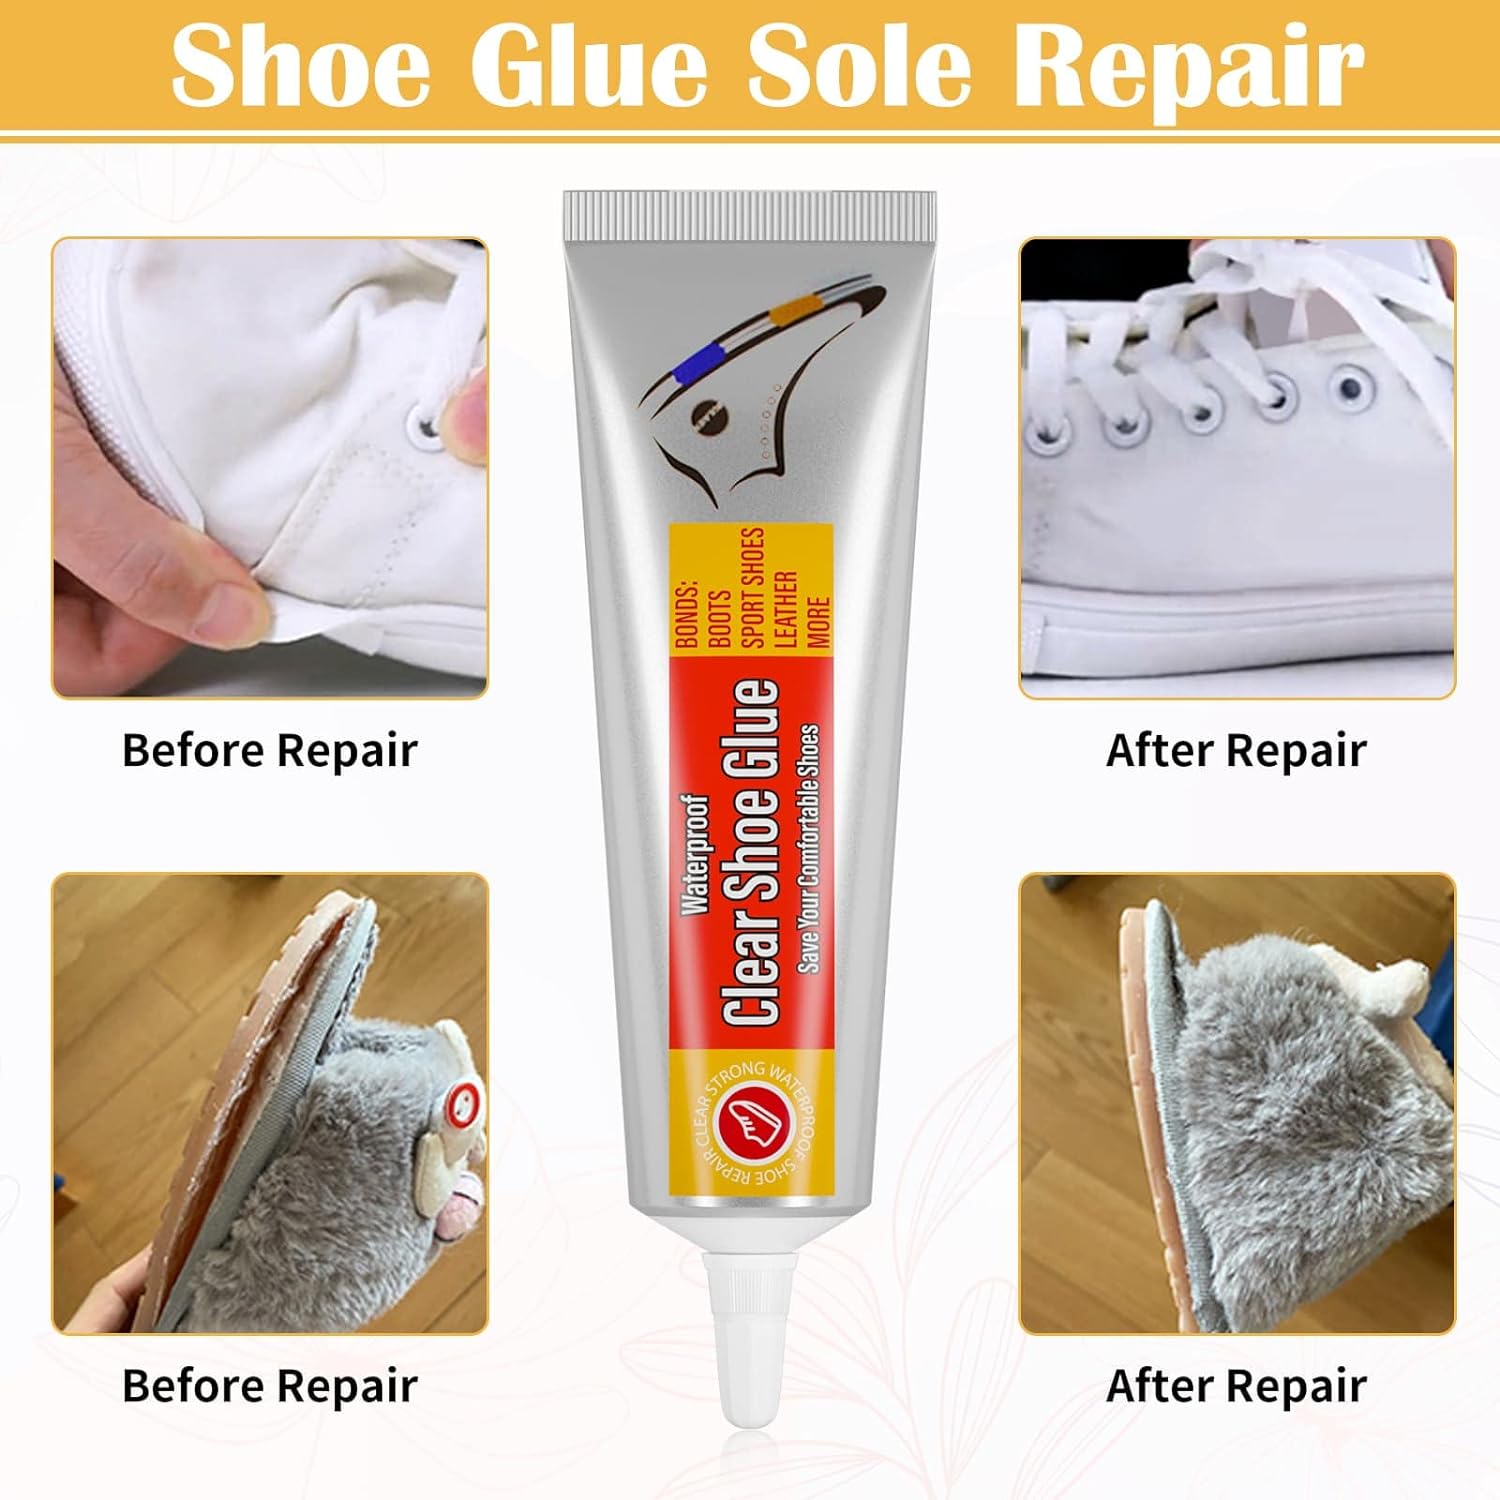 Generic Shoe Glue Sole Repair Adhesive, Evatage Waterproof Shoe Repair Glue Kit with Shoe Fix Glue for Sneakers Boots Leather Handbags